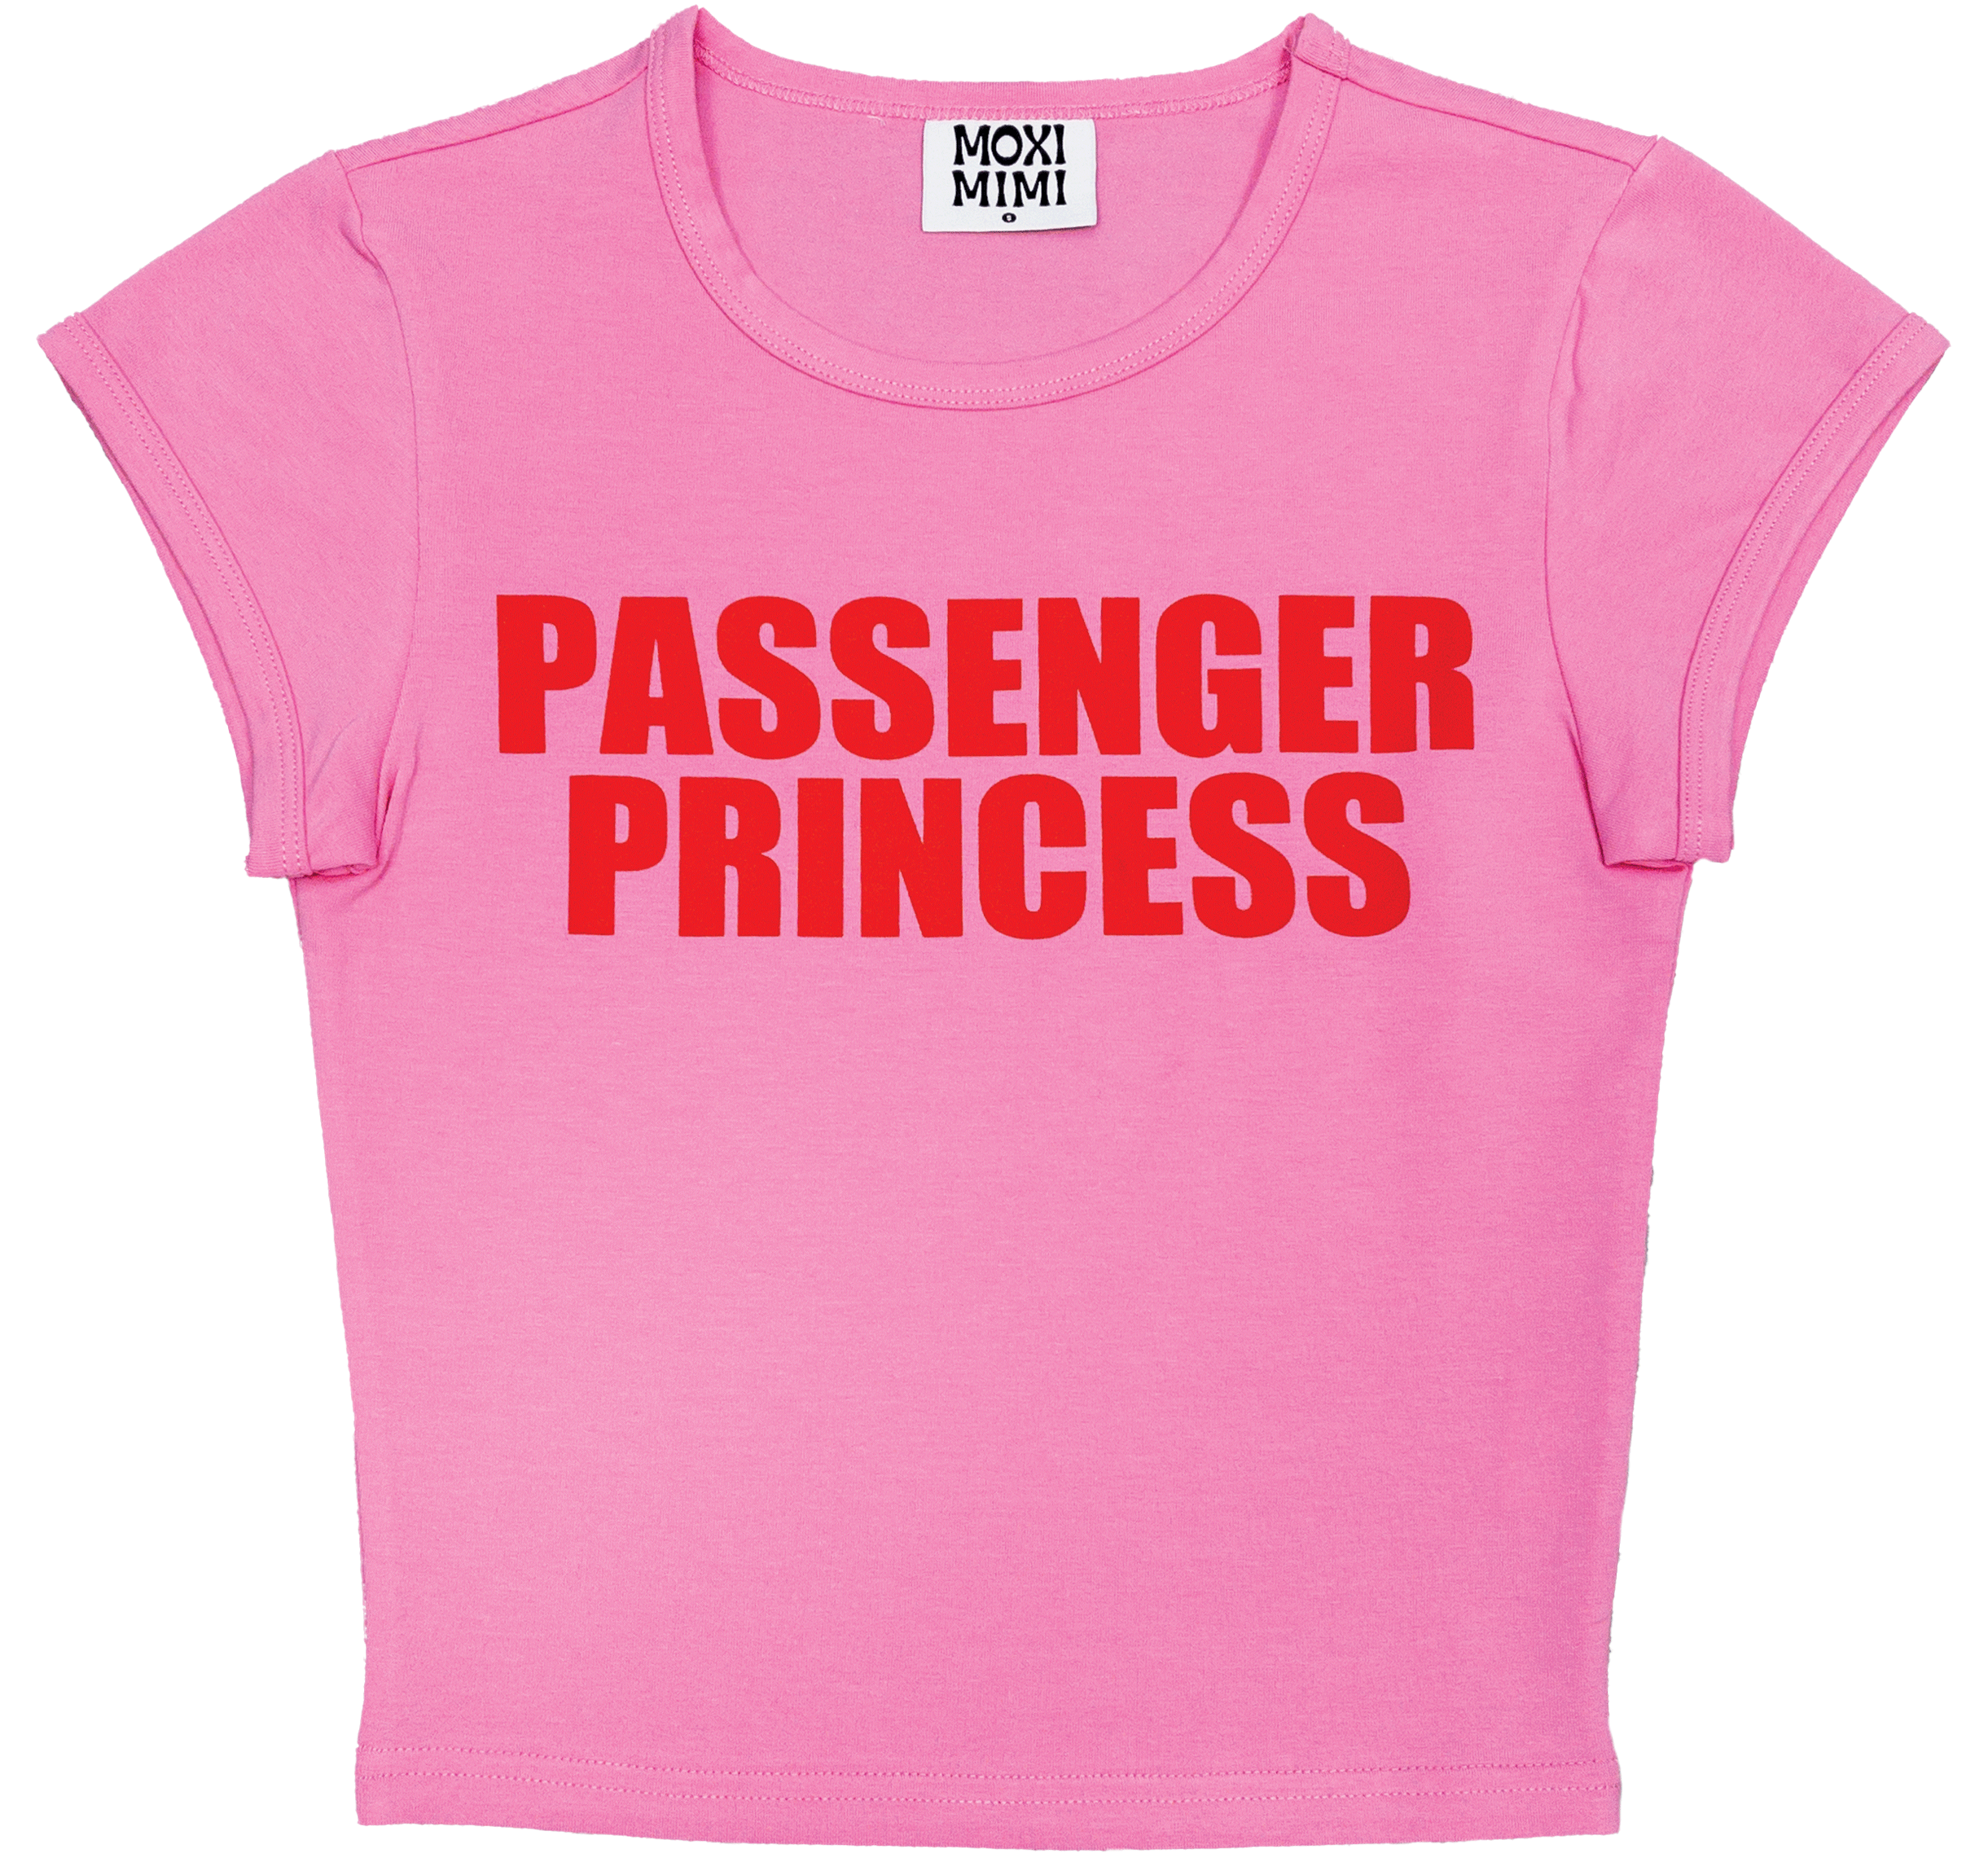 Princess Baby Moxi Passenger – Mimi Tee